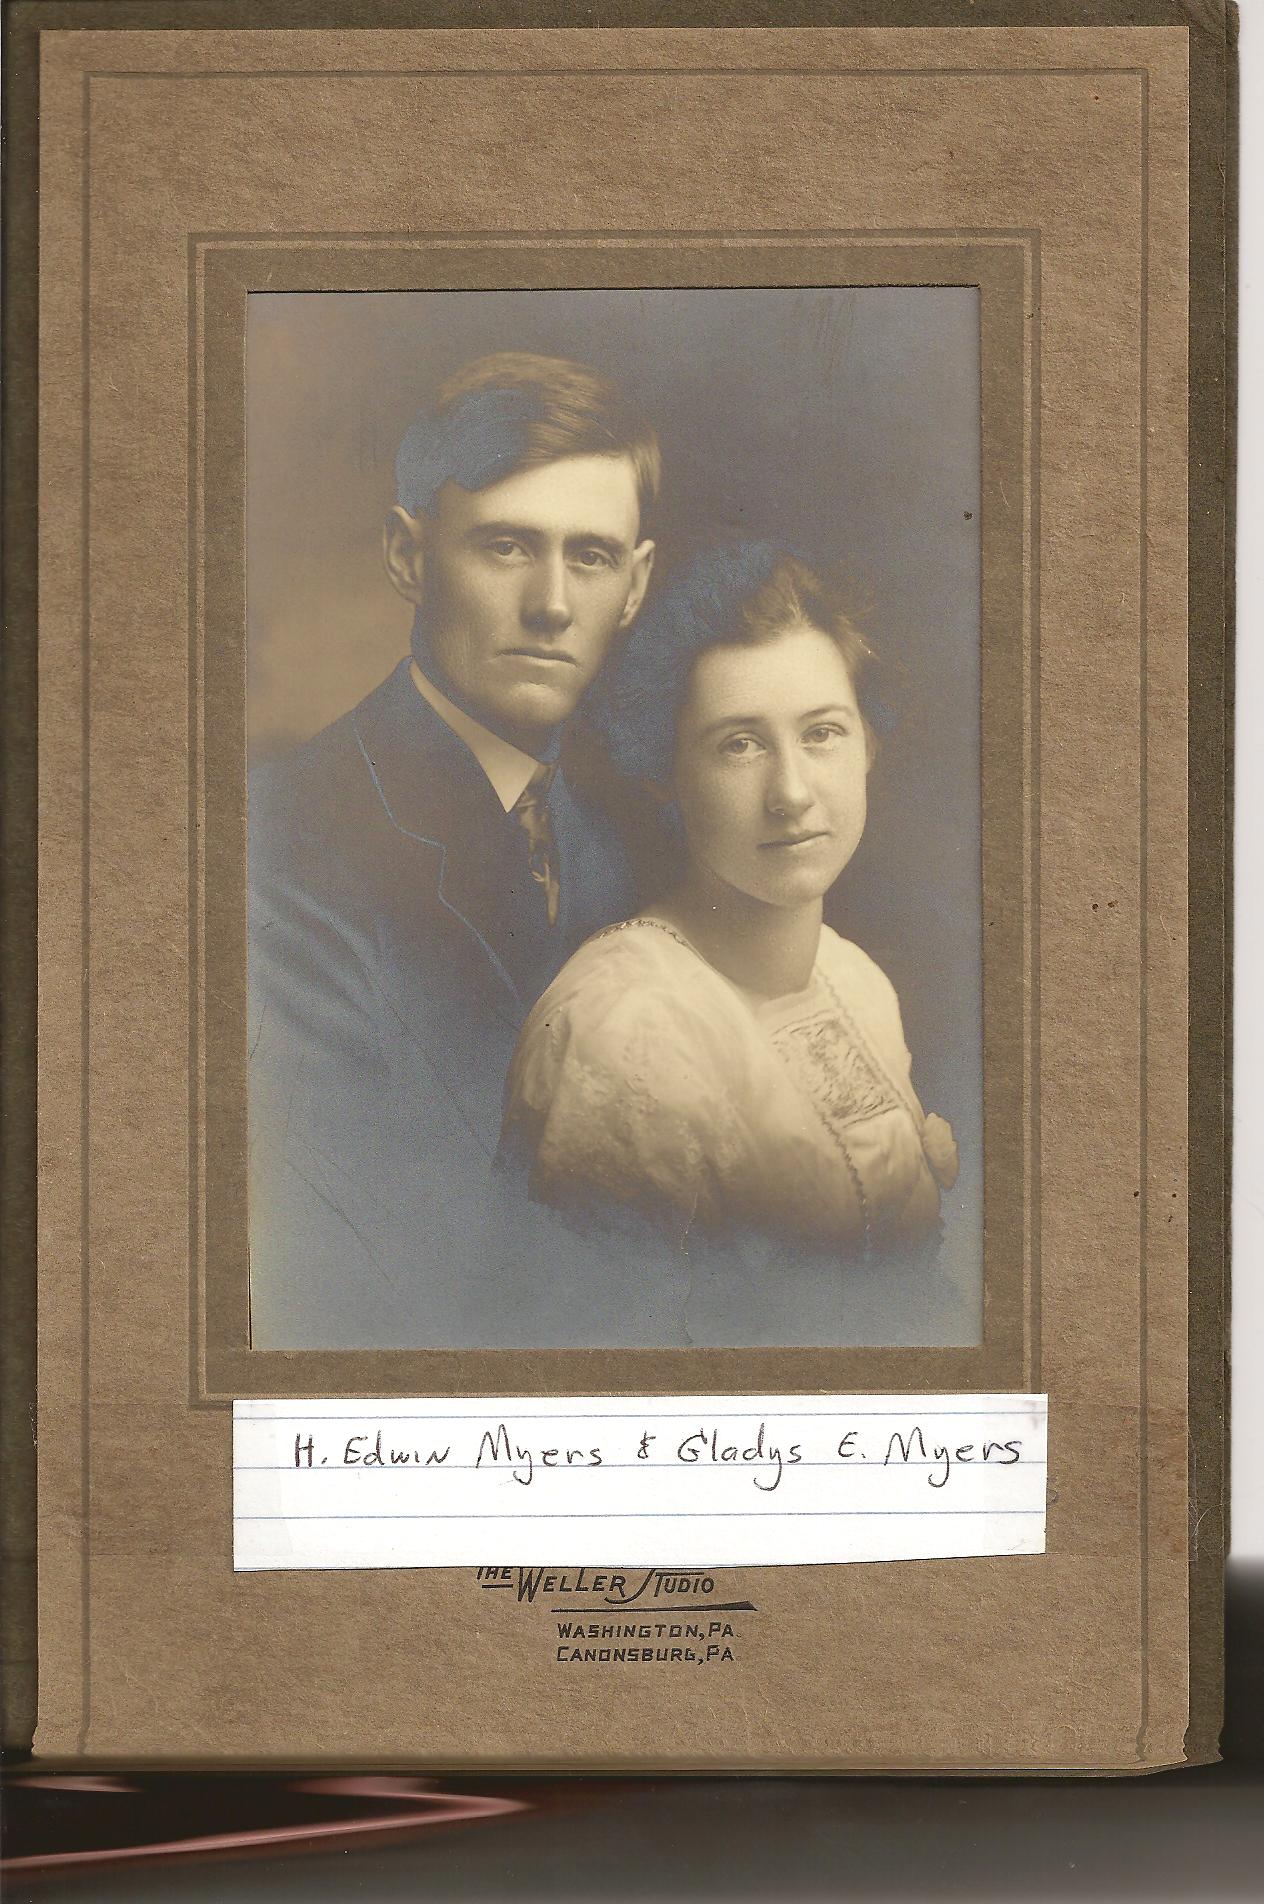 H. Edwin and Gladys E. Myers